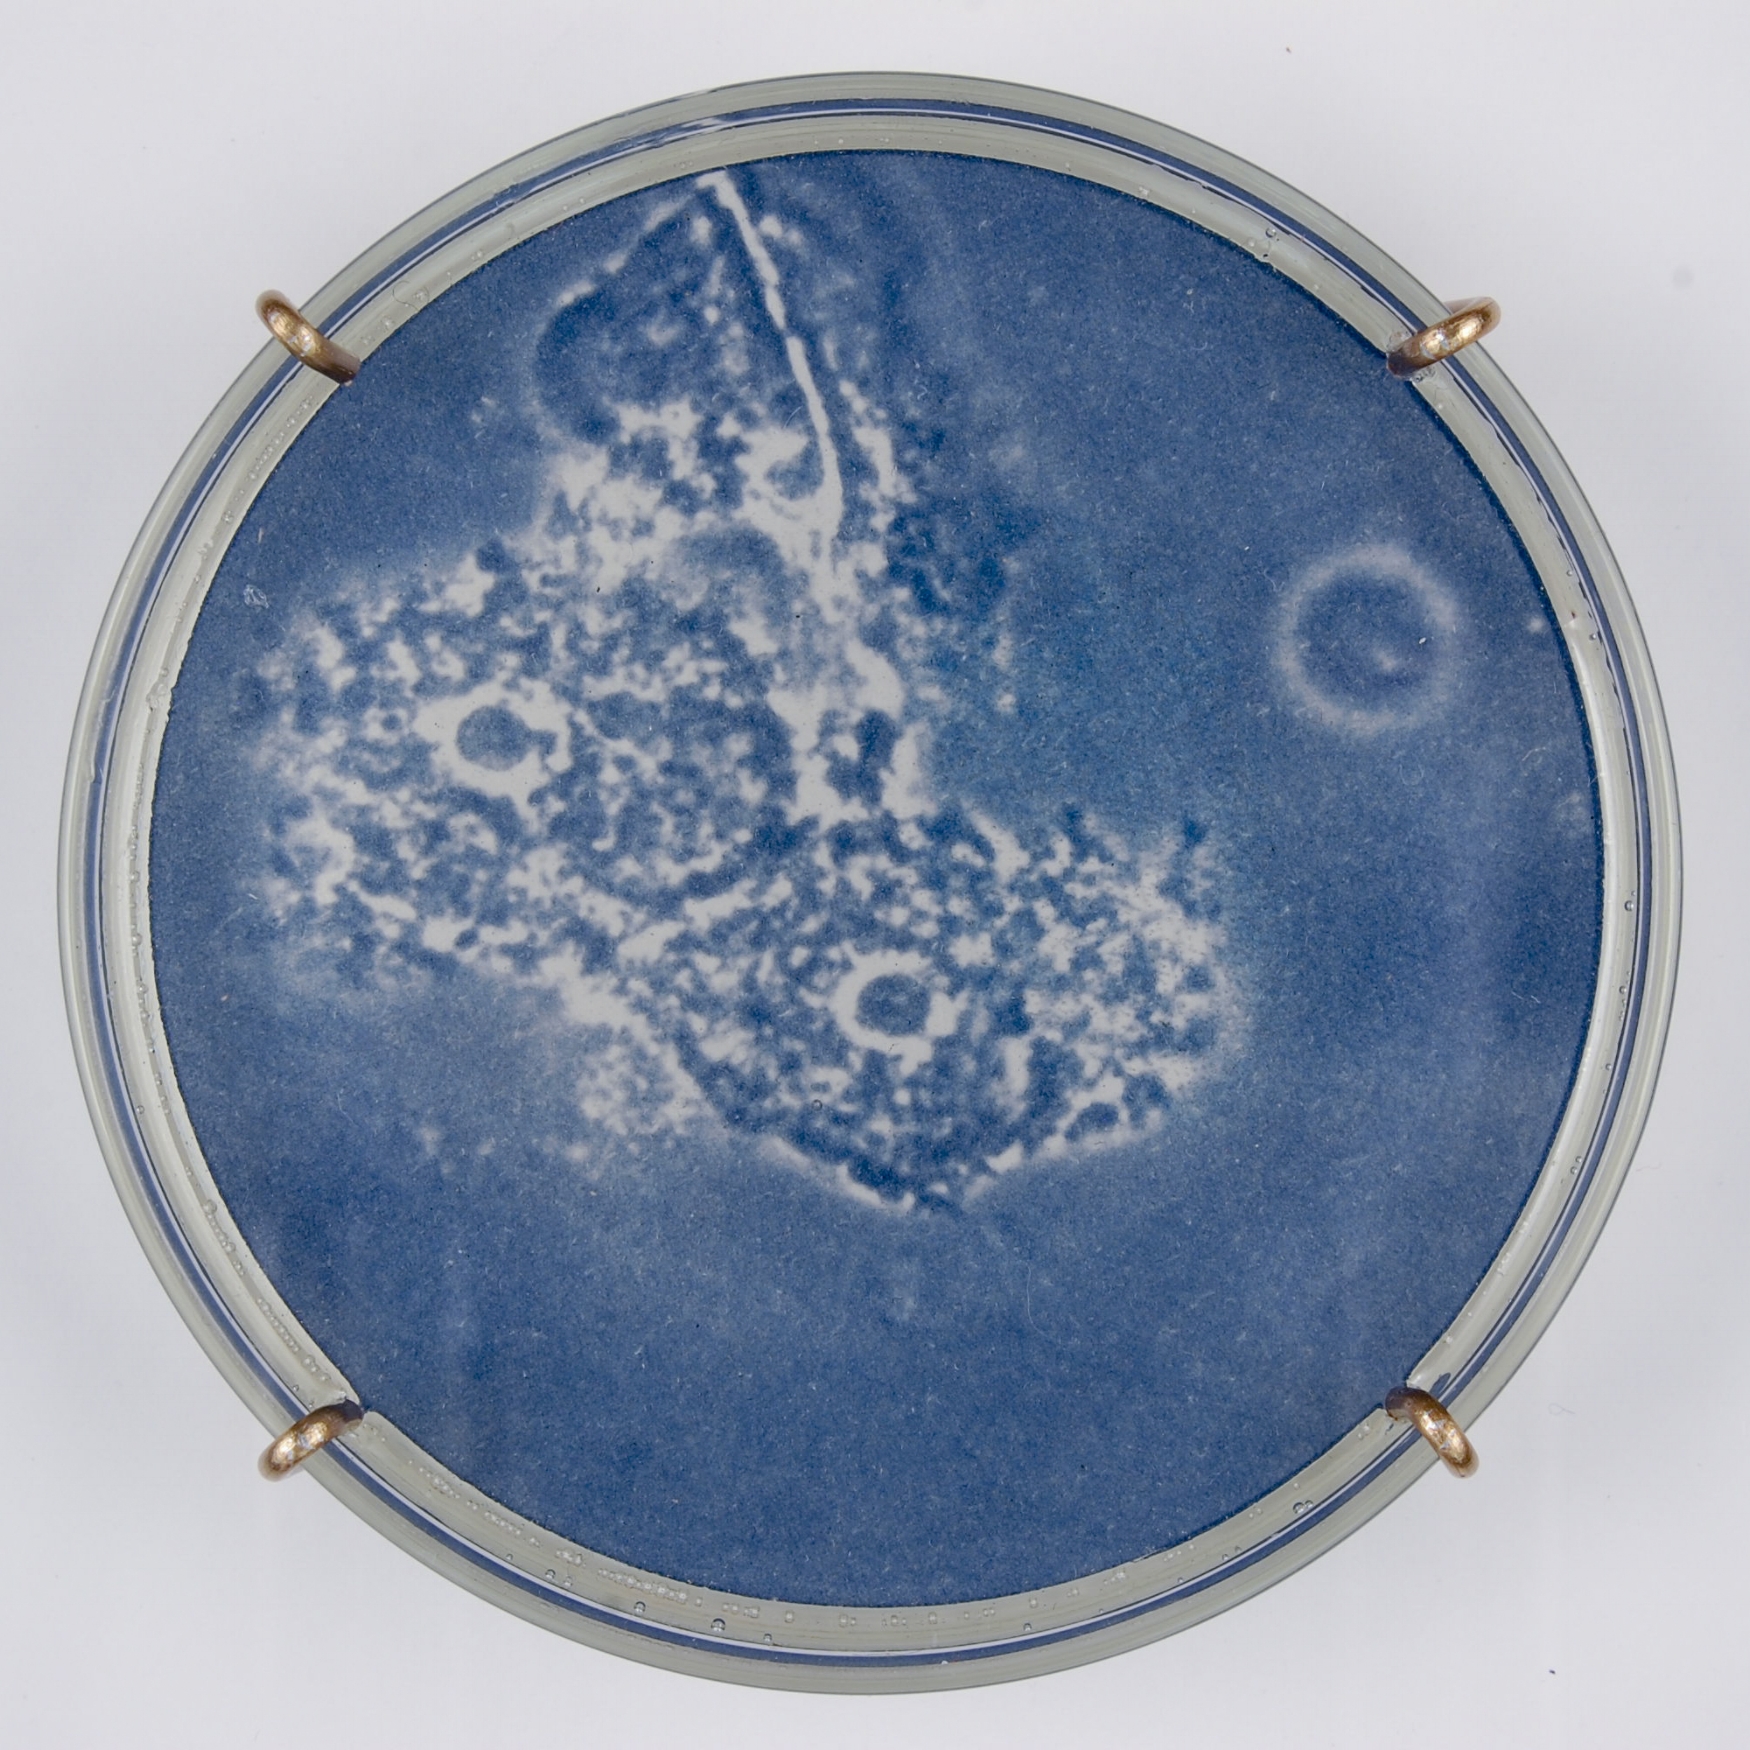 Bacterial vaginosis I (detail)